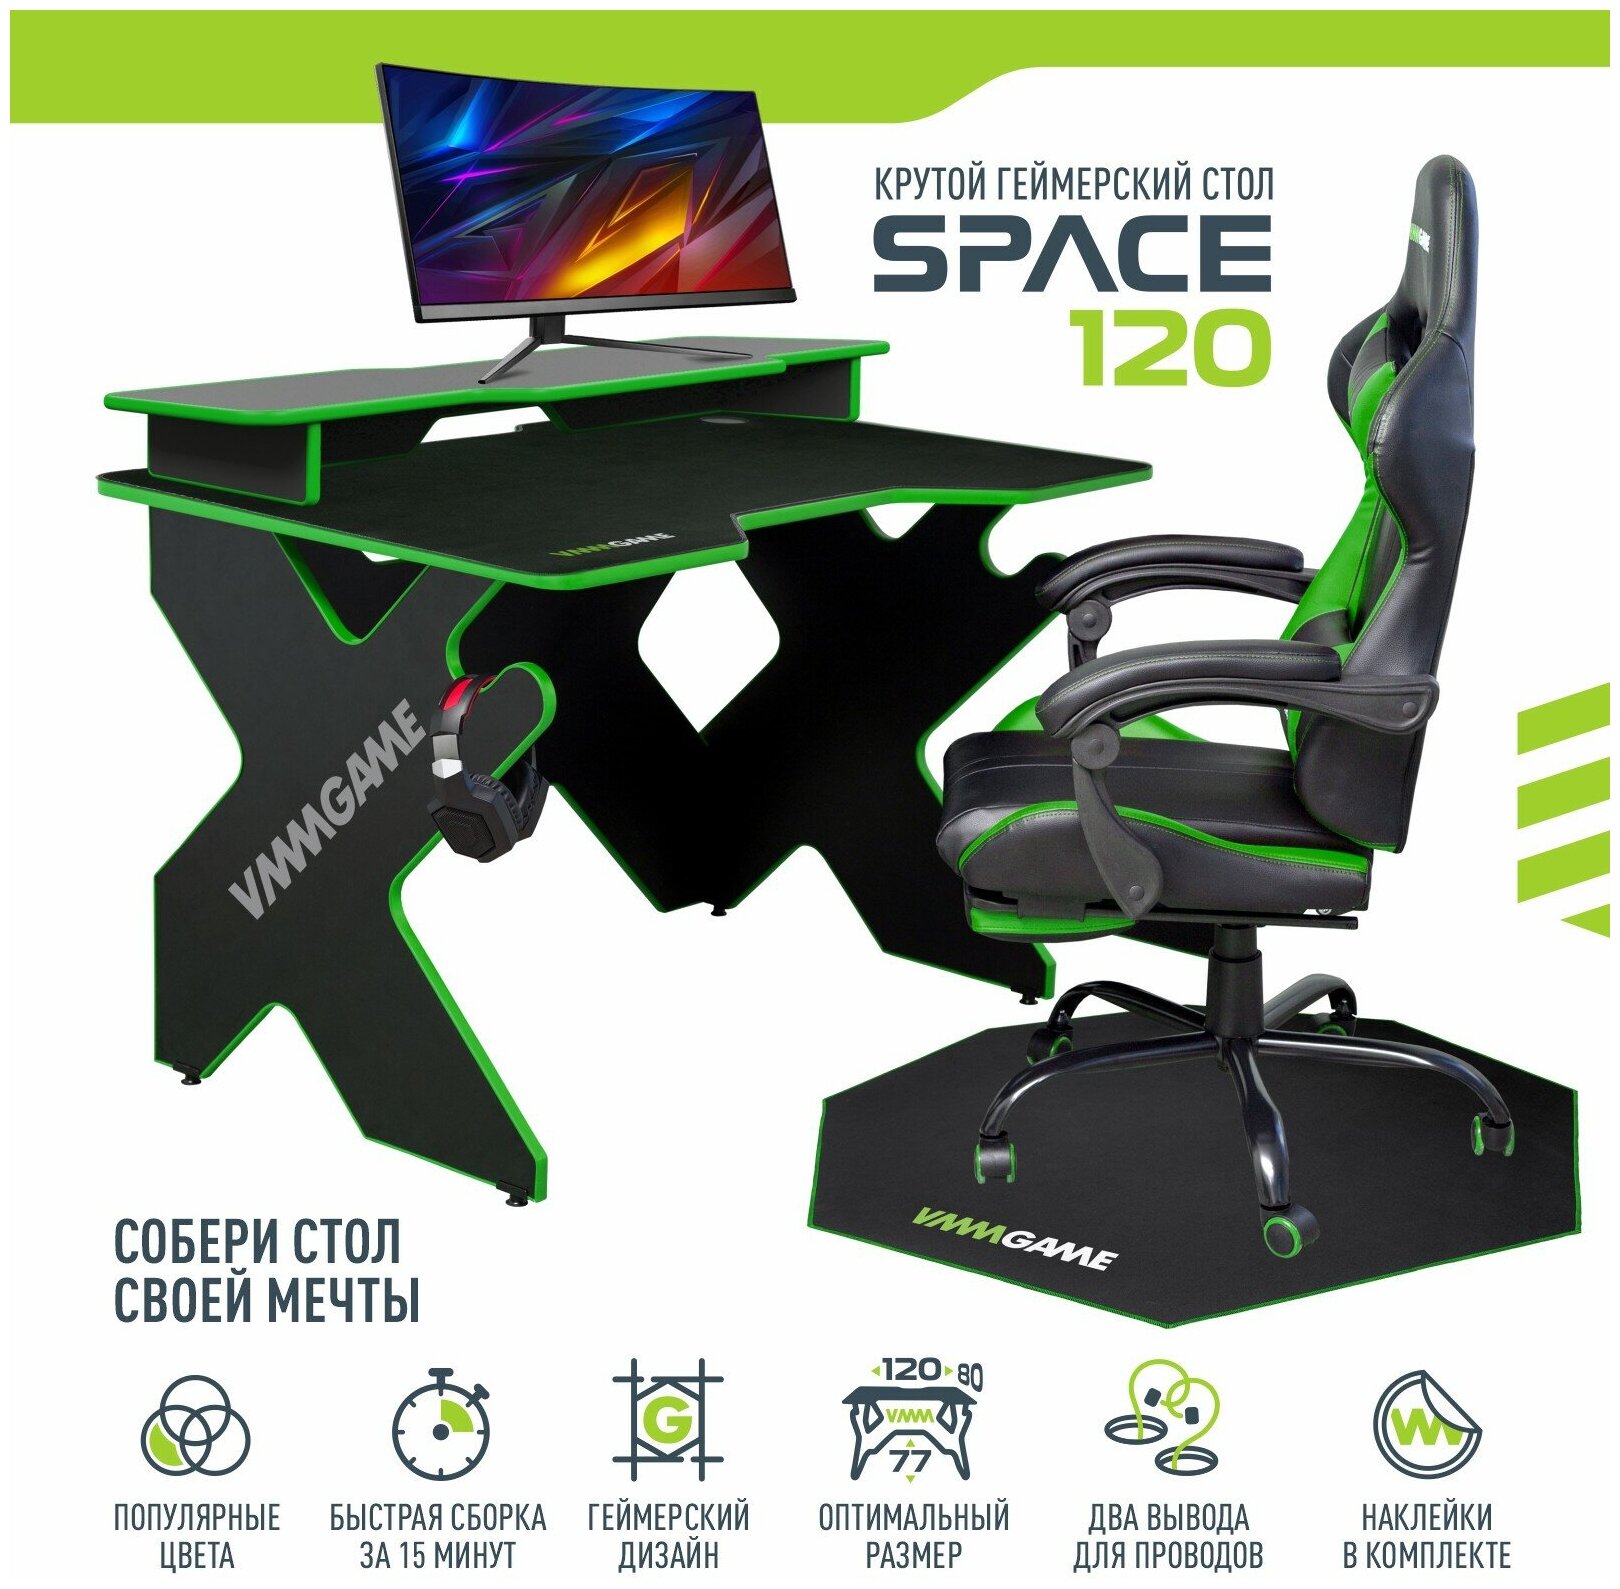 Игровой компьютерный стол VMMGAME SPACE DARK Green